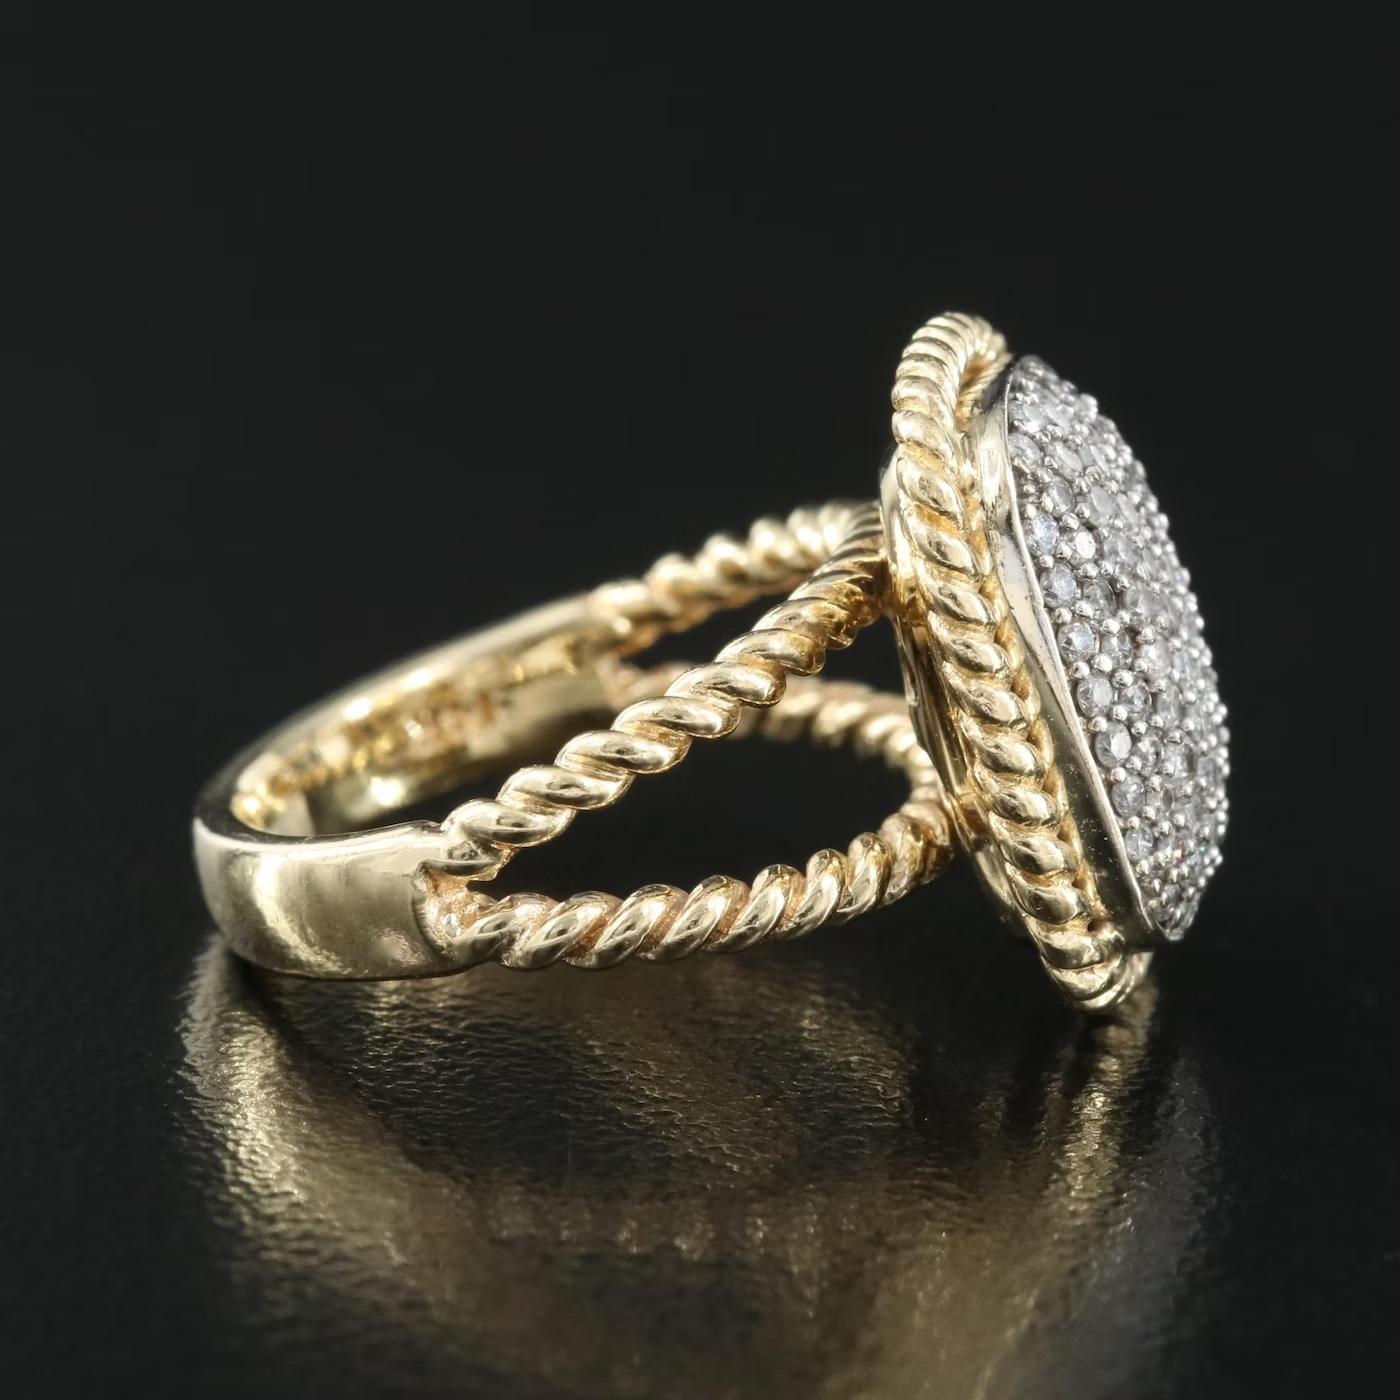 Round Cut $5950 / NEW / EFFY D'ORO Diamond Ring / 14K Gold / Luxury For Sale